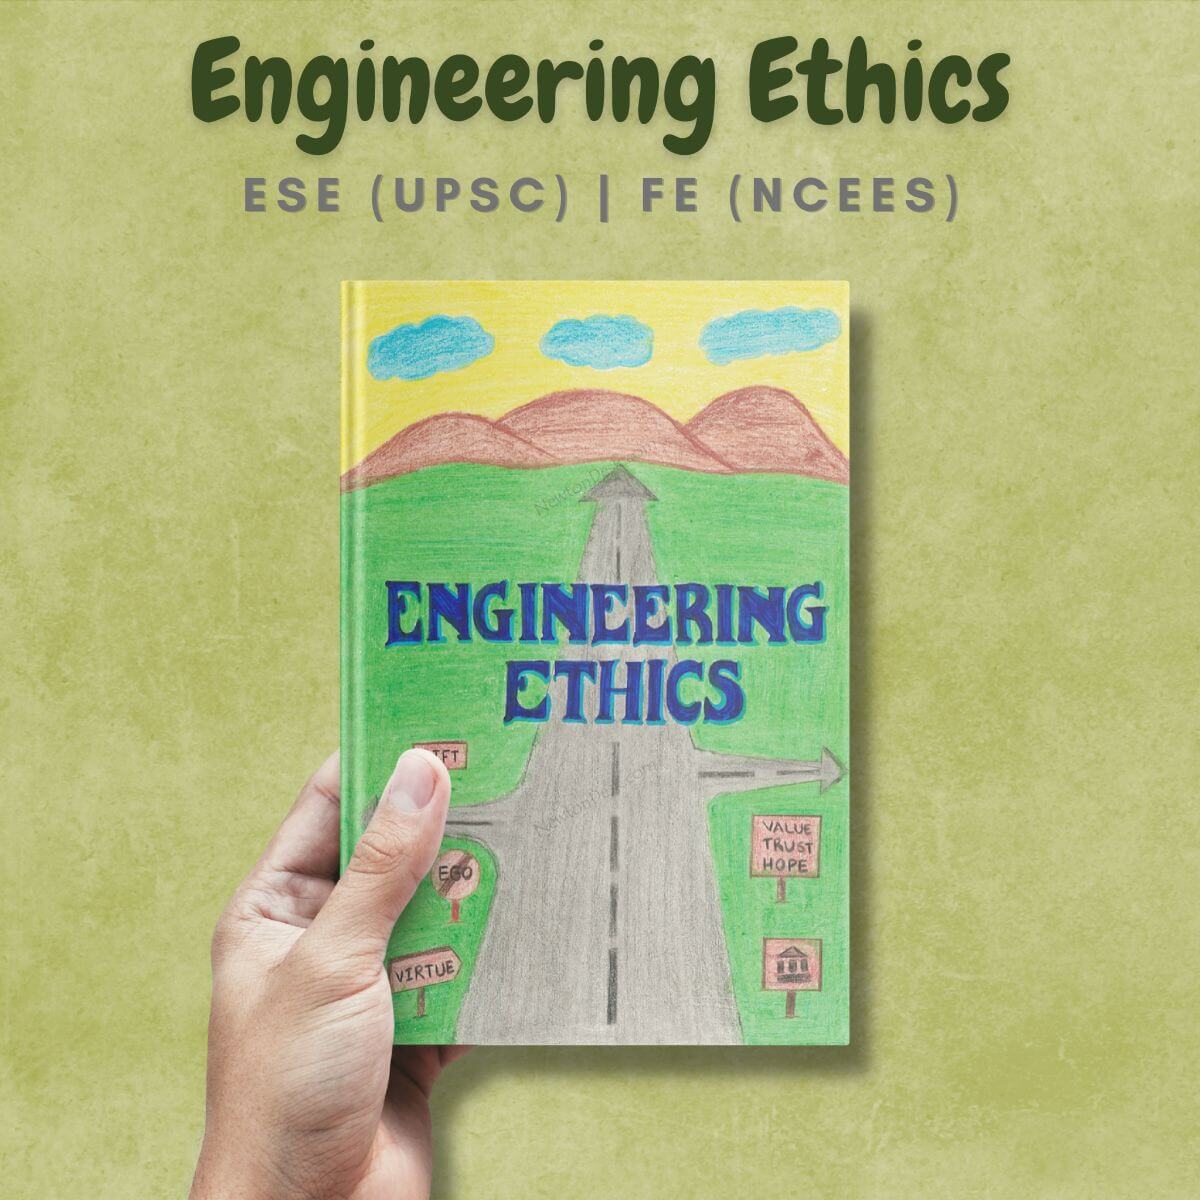 aerospace engineering ethics case study